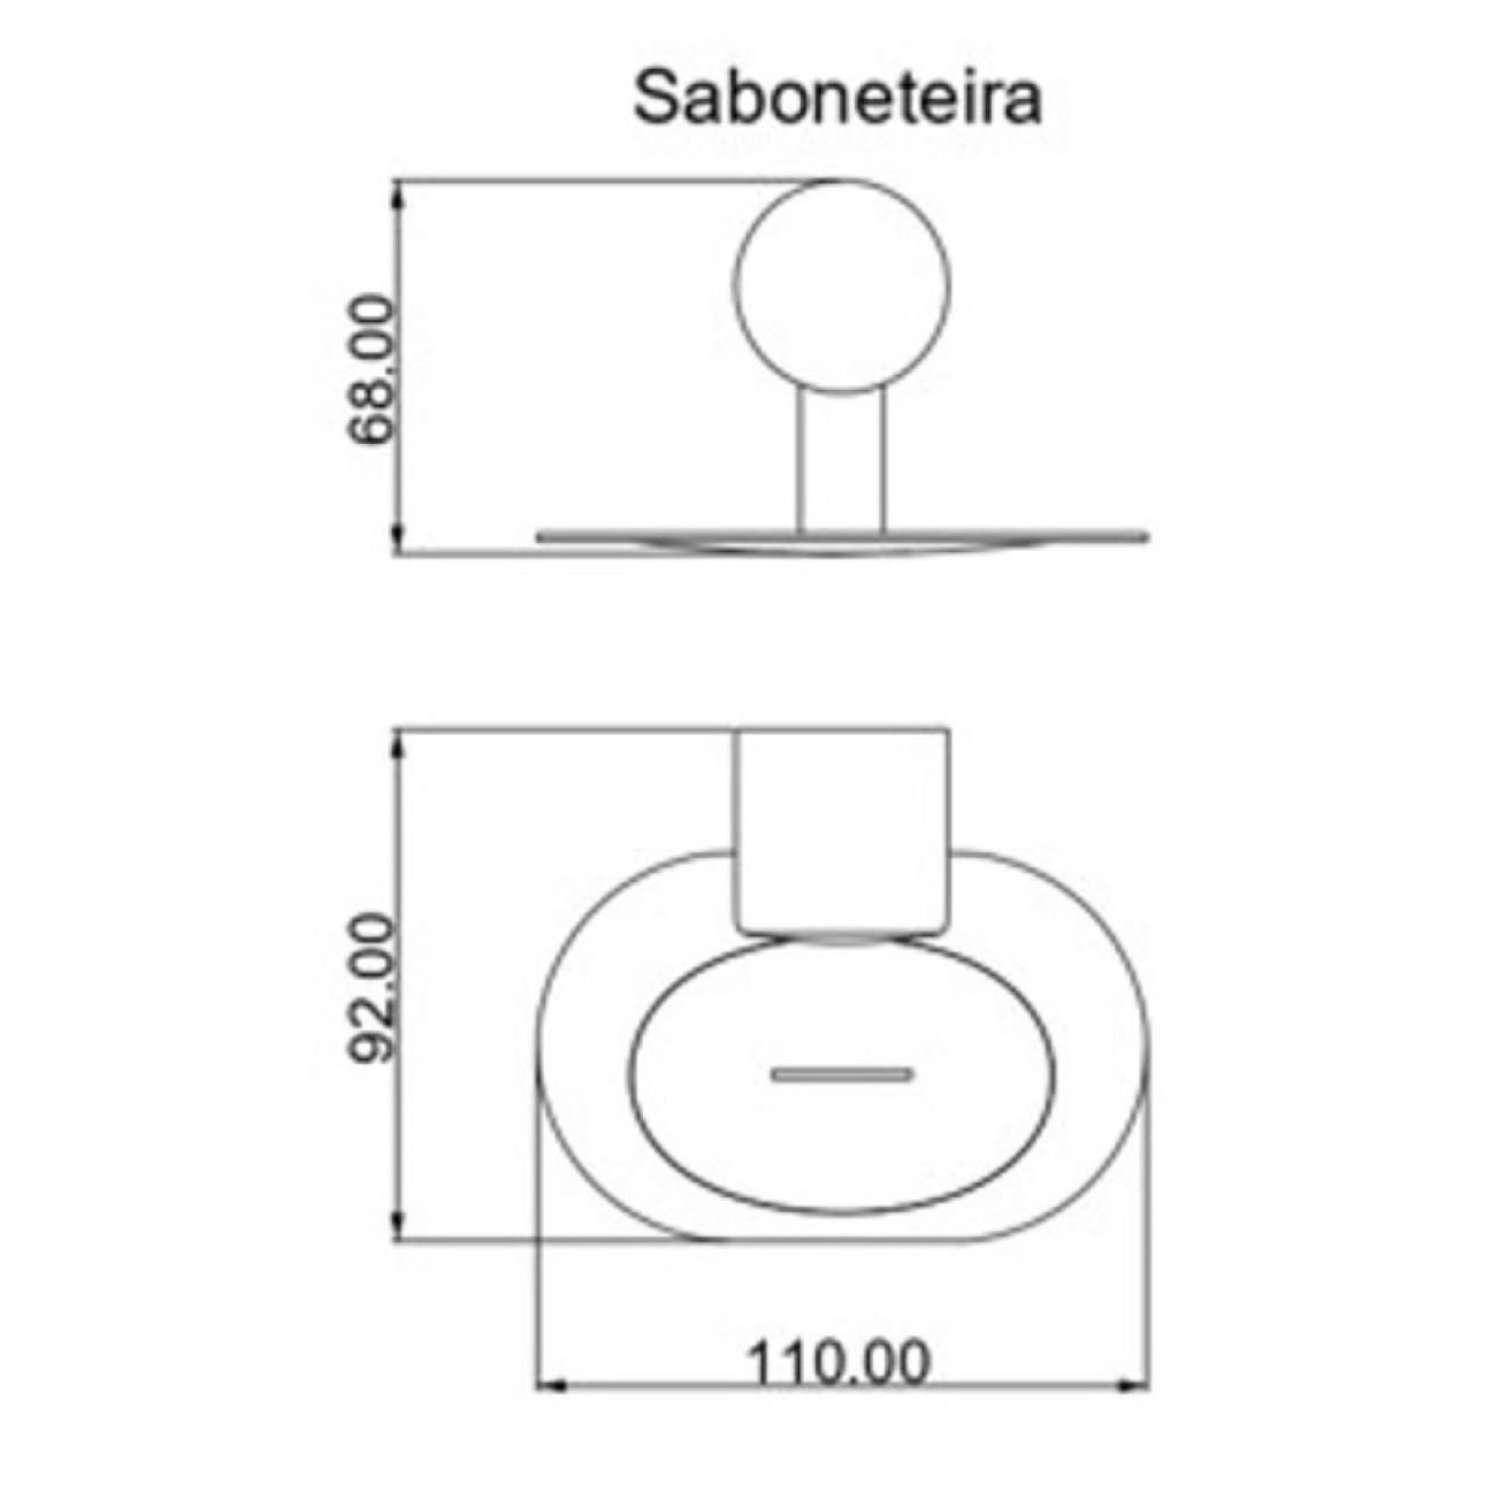 Saboneteira Serenity SR11020 Ducon Metais - 2